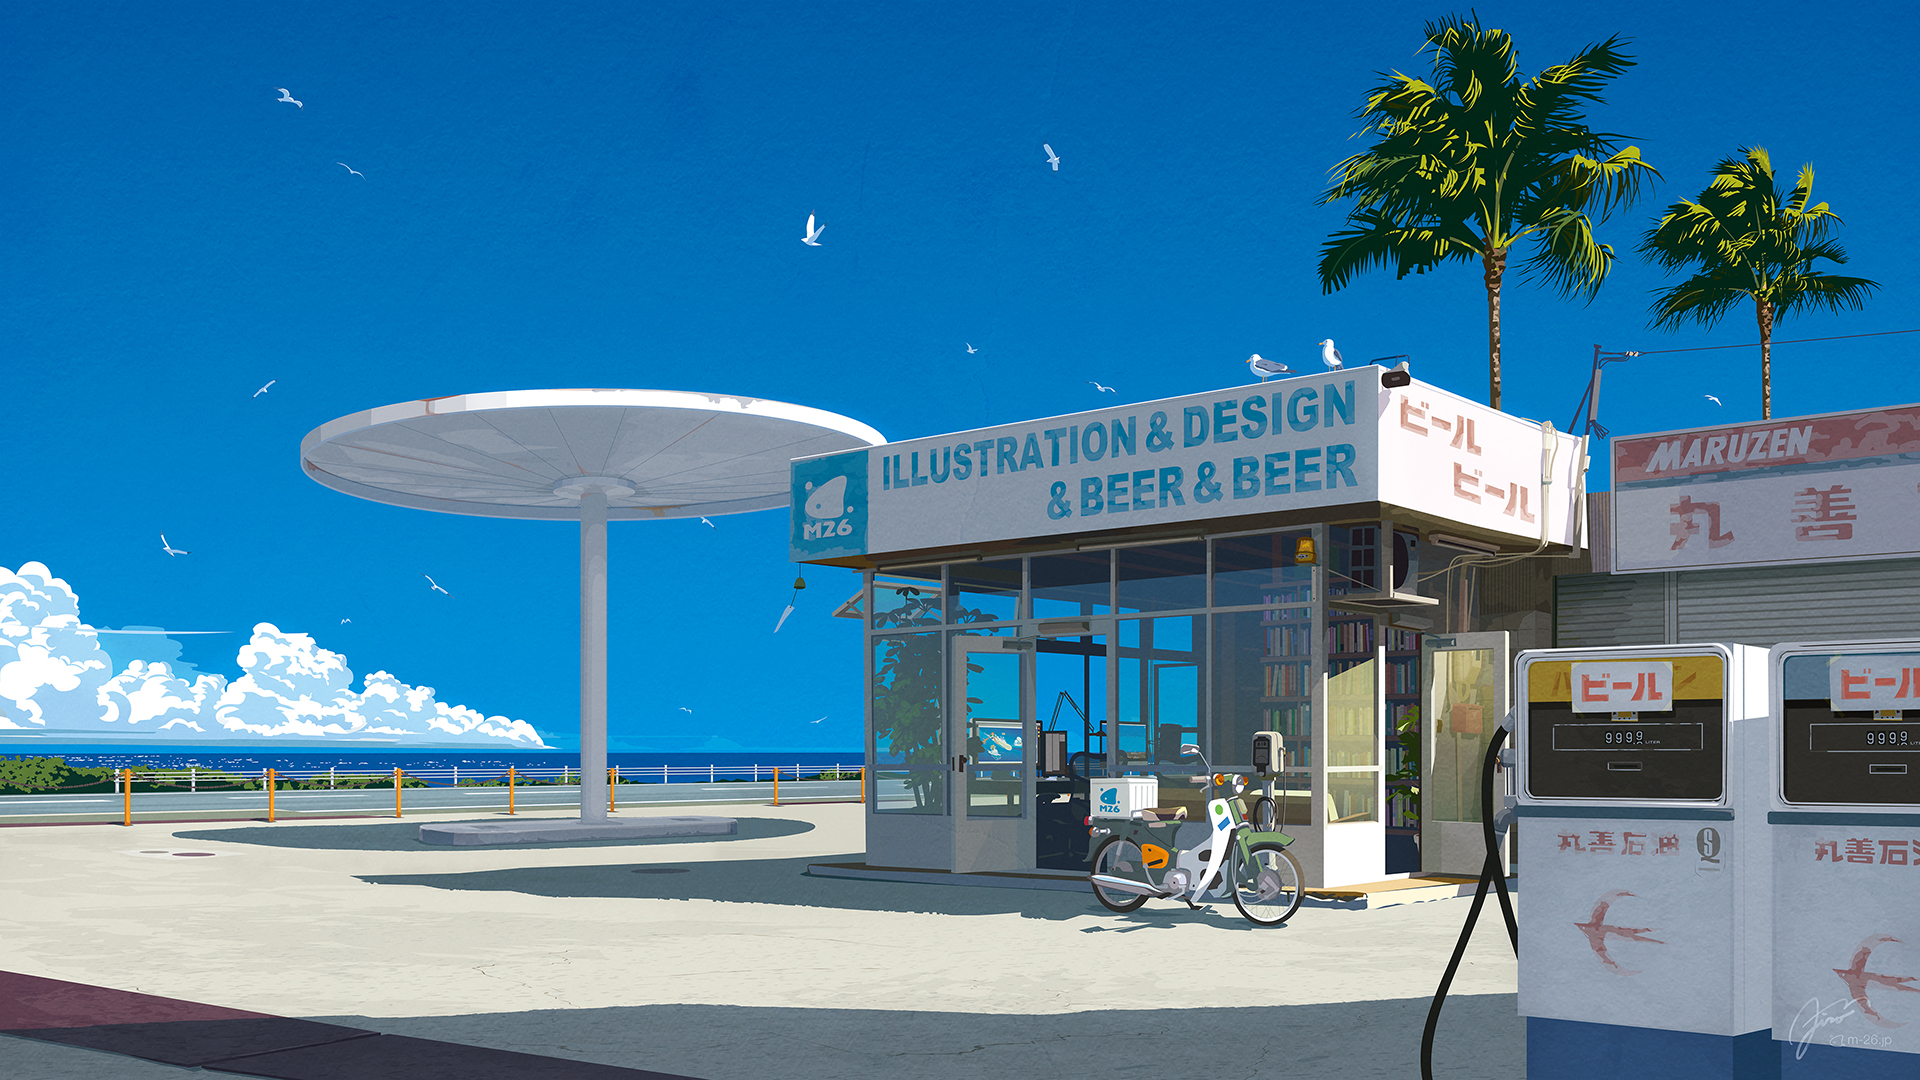 General 1920x1080 beach art installation sunlight gas station digital art sky clouds palm trees birds animals